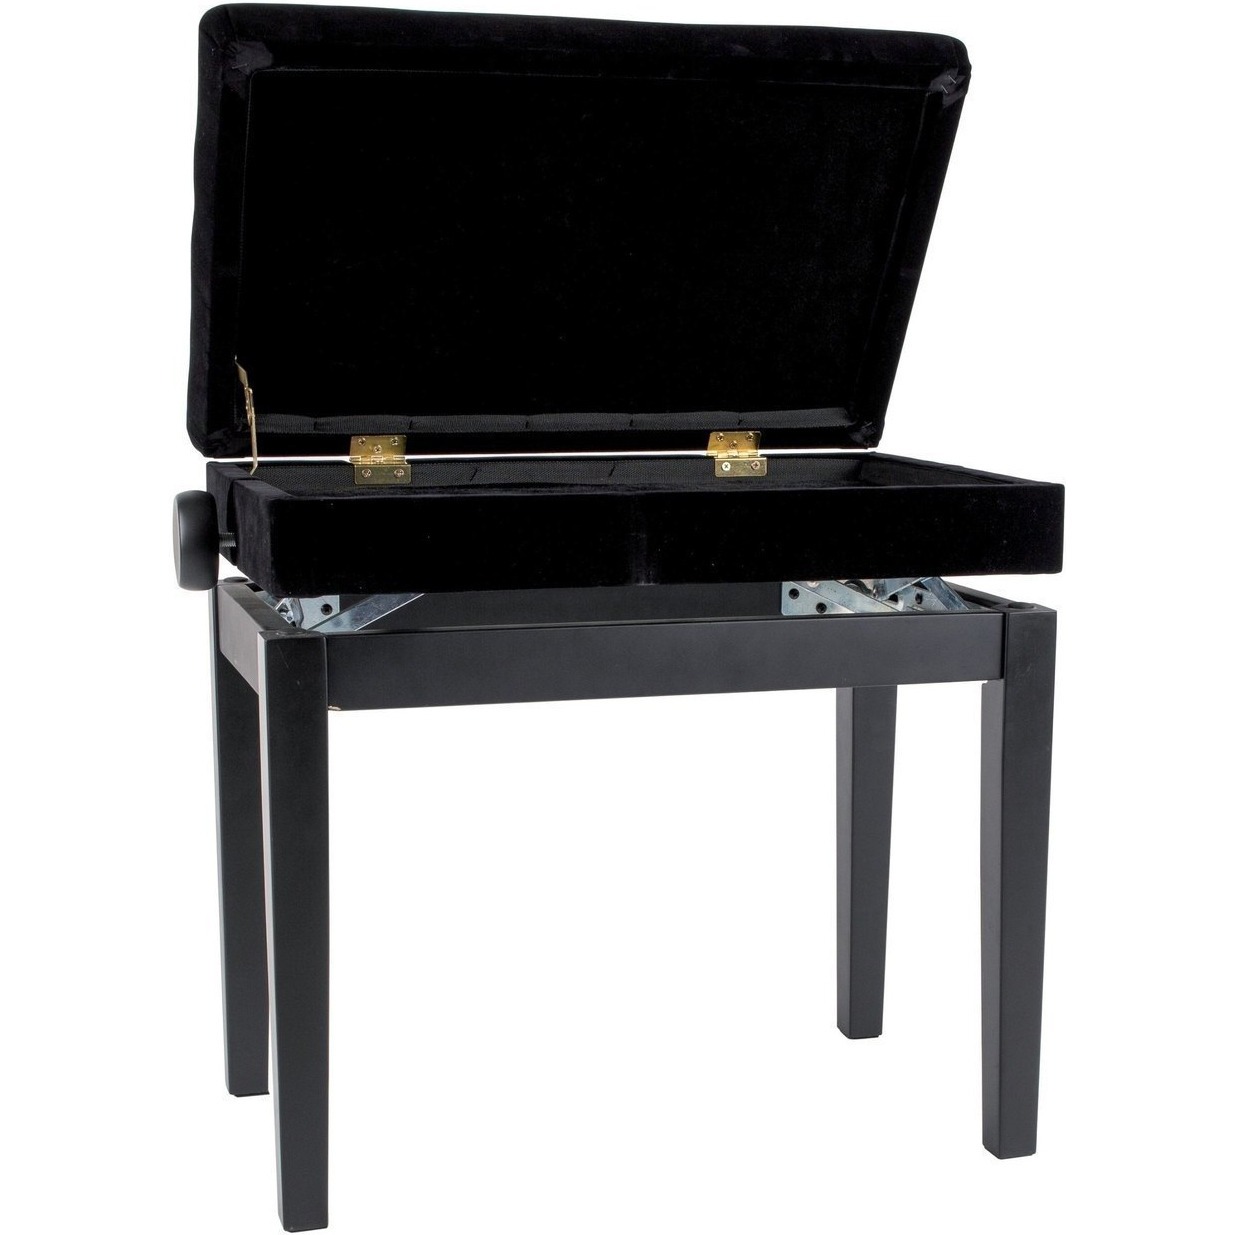 Gewa Piano Bench Deluxe Black highgloss